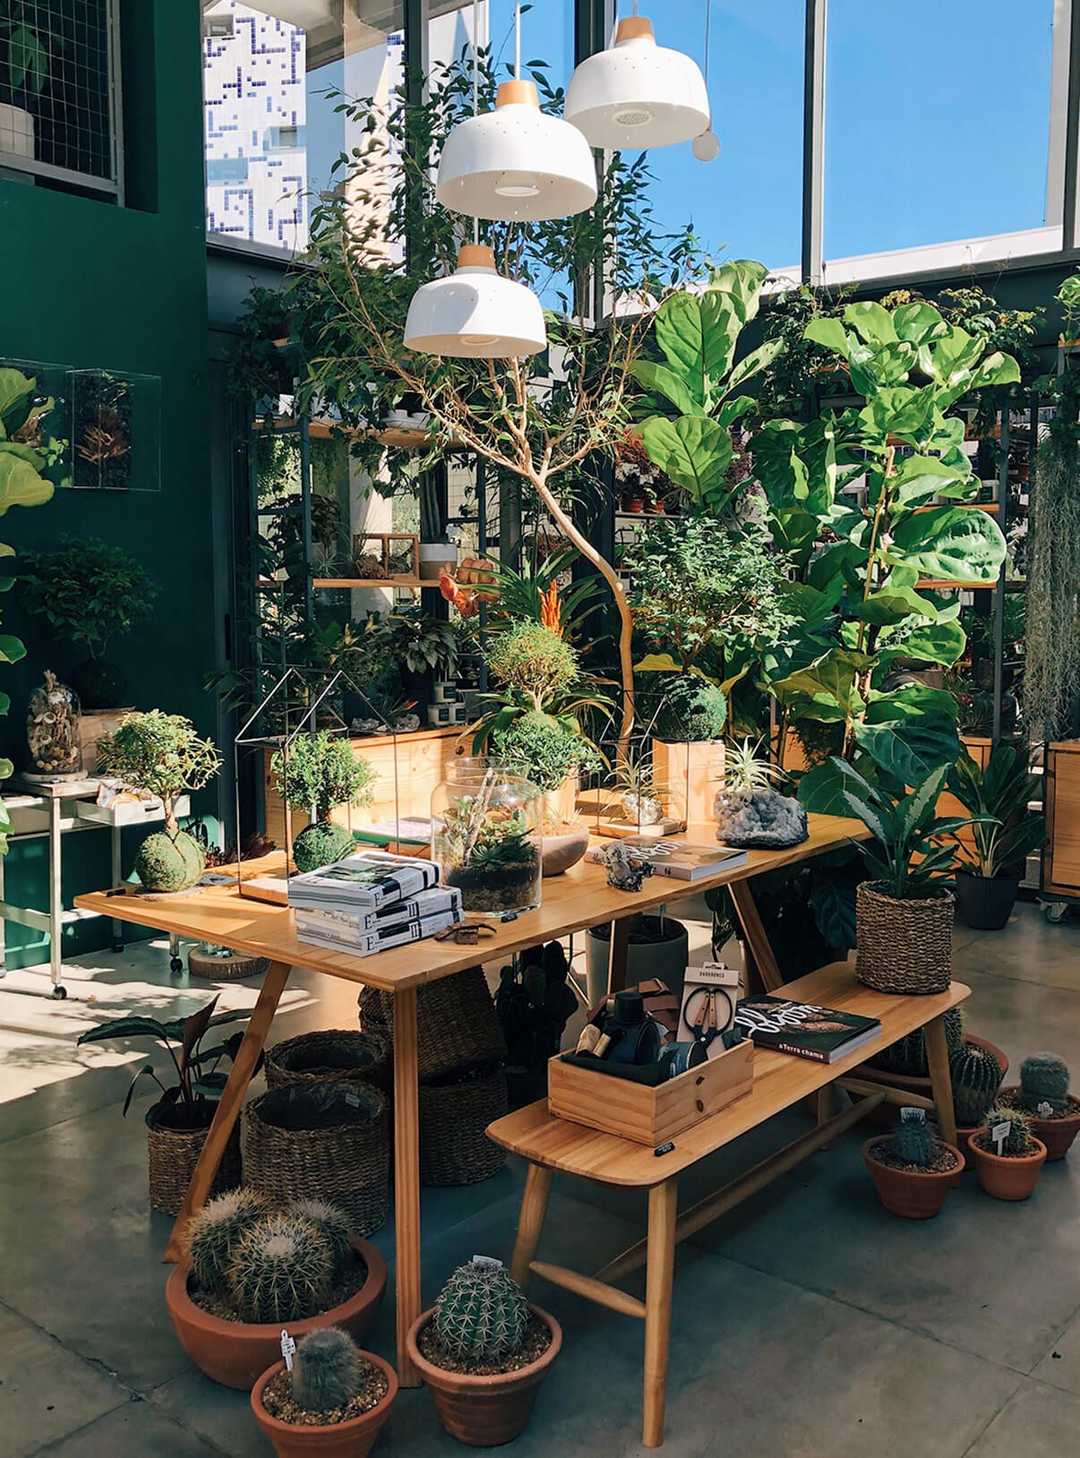 Vista interna da loja FLO Atelier Botânico